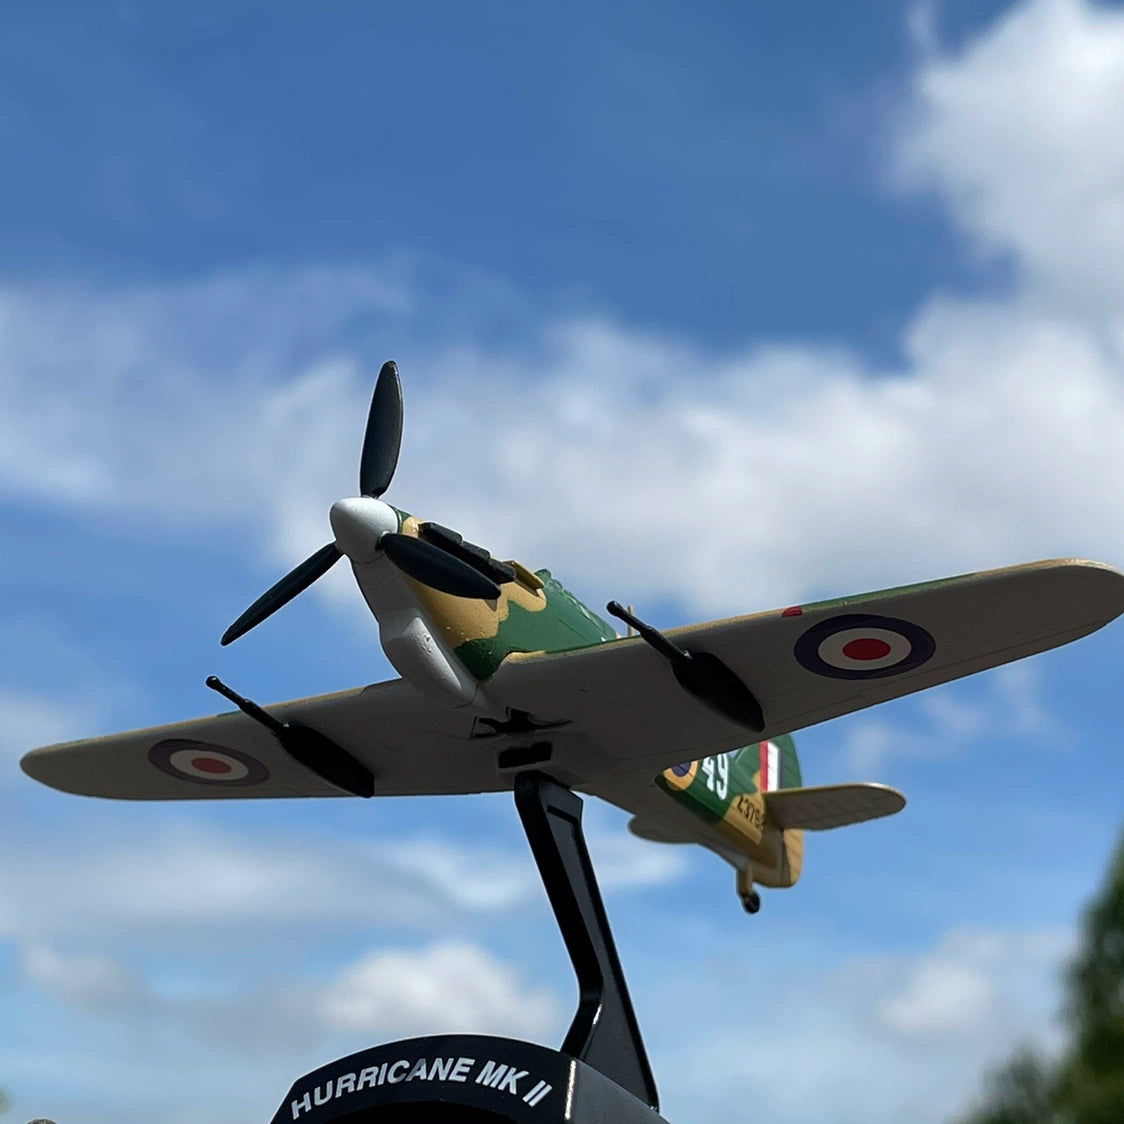 1/100 Scale Hawker Hurricane Mk II WWII British Fighter Diecast Model Aircraft